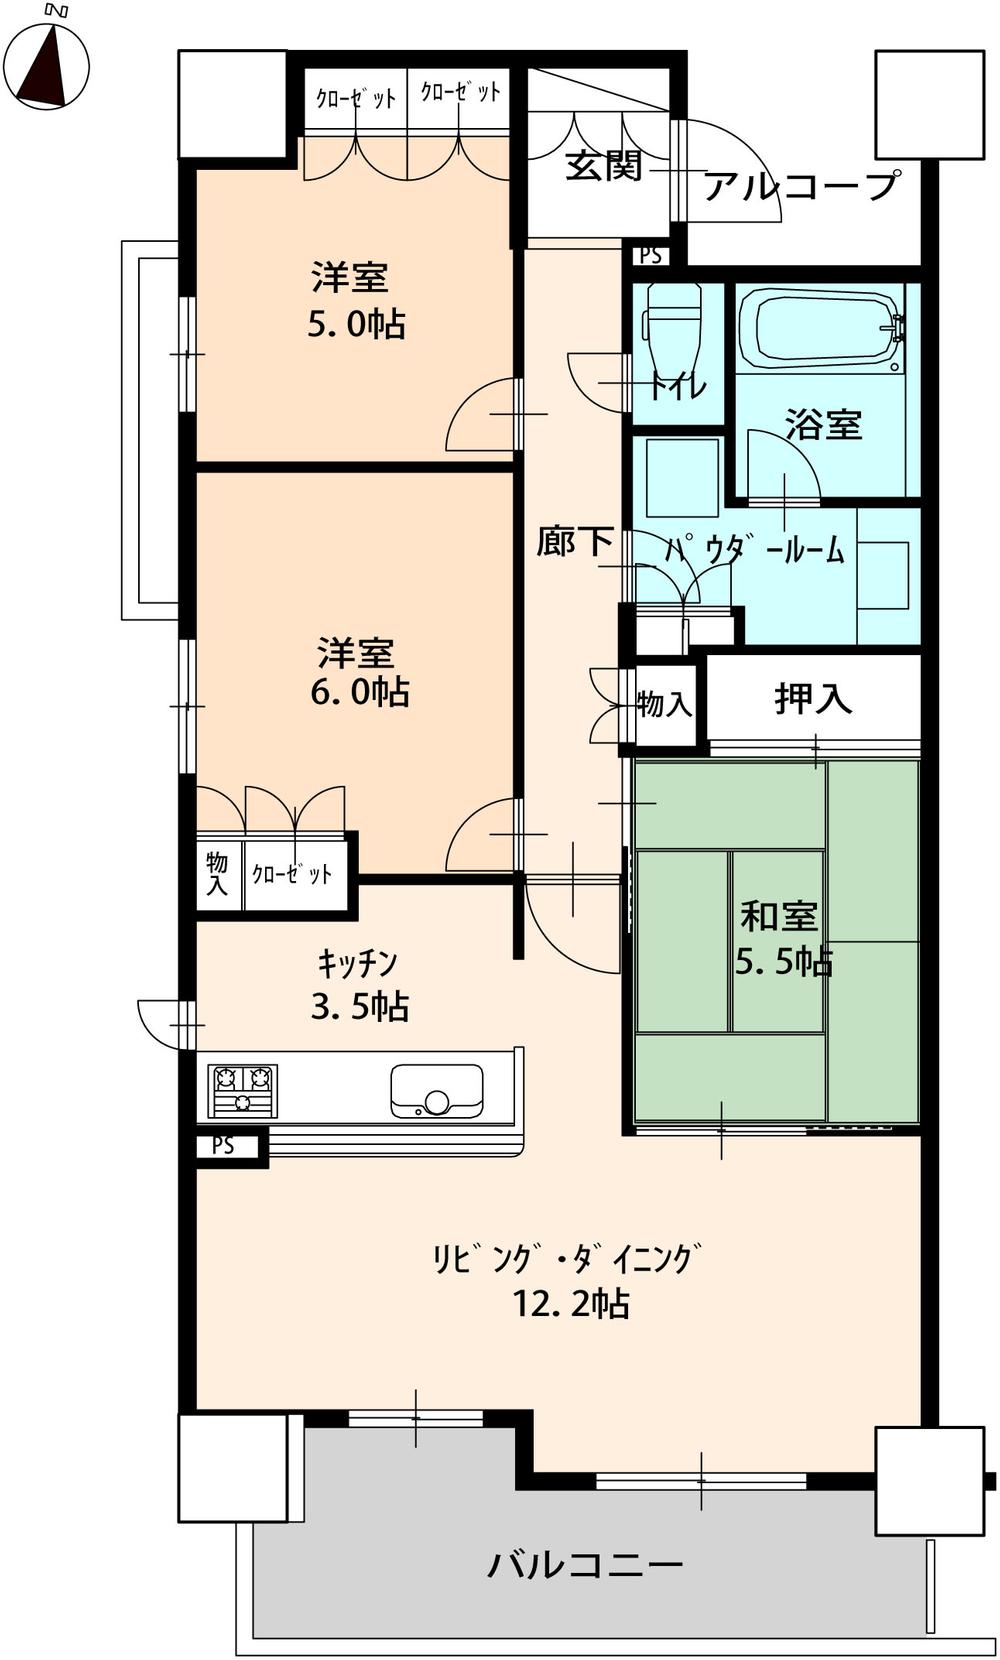 Floor plan. 3LDK, Price 25 million yen, Occupied area 75.16 sq m , Balcony area 10.04 sq m